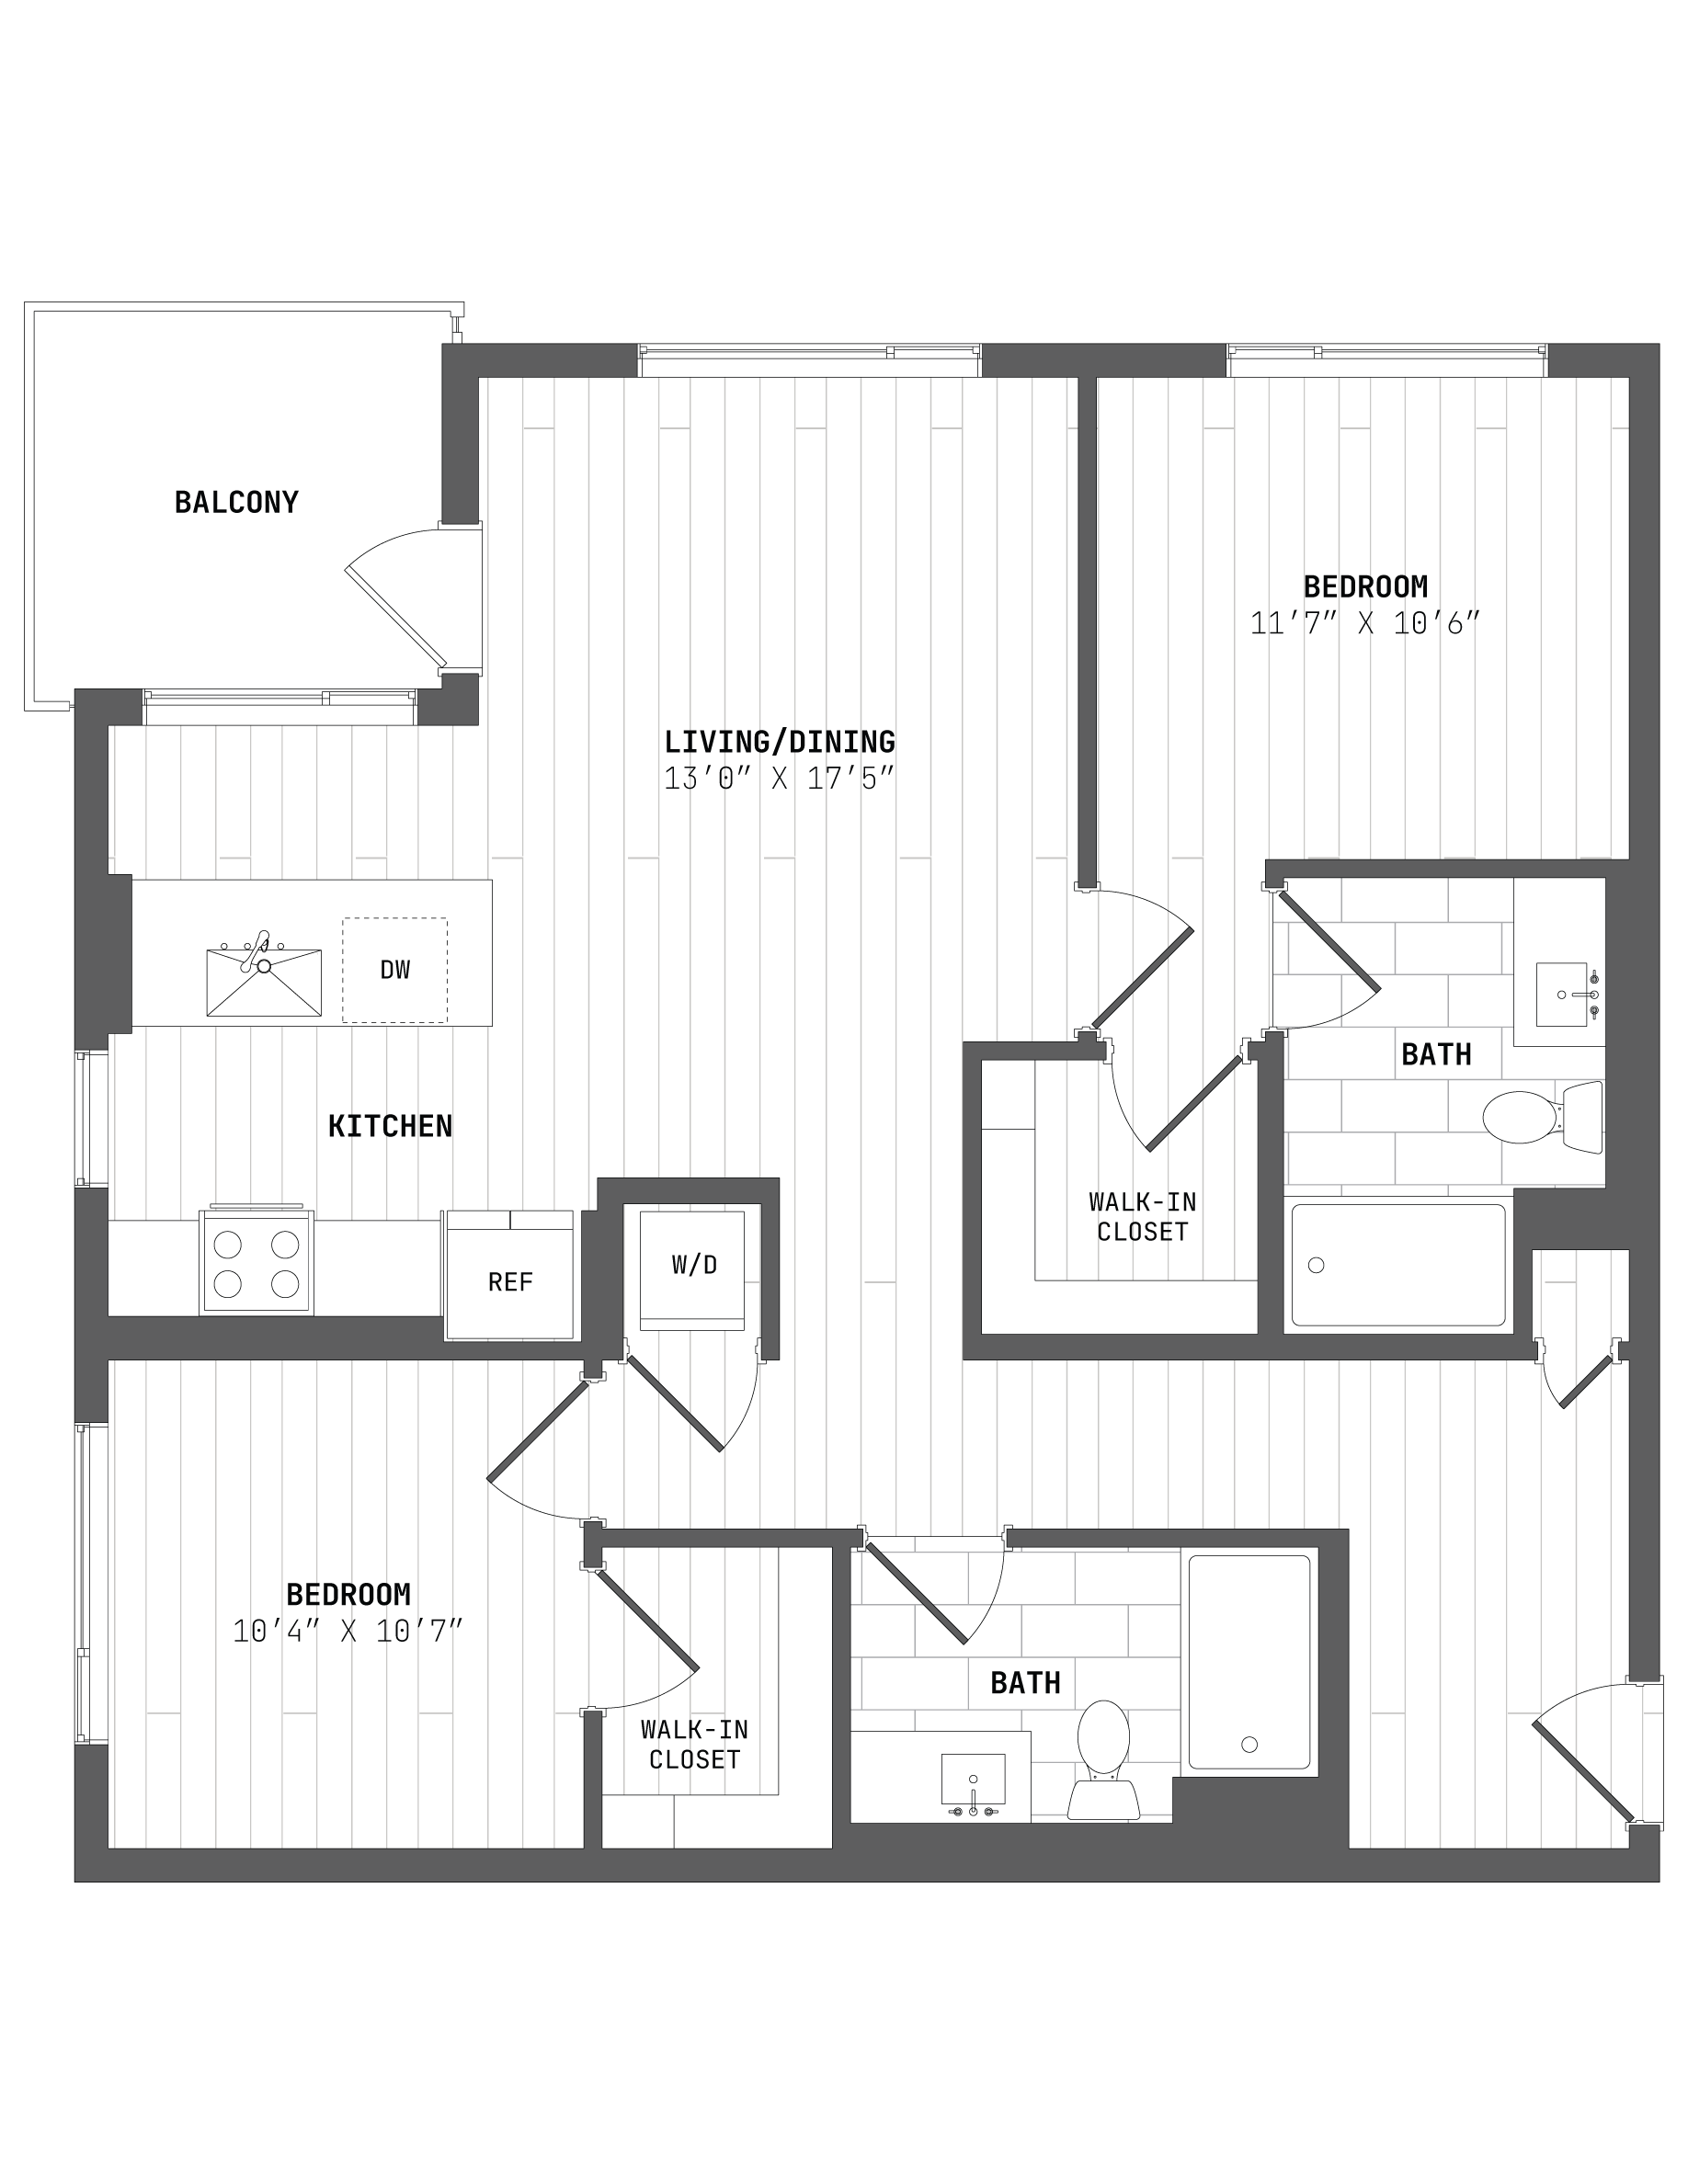 Apartment 4785247 floorplan